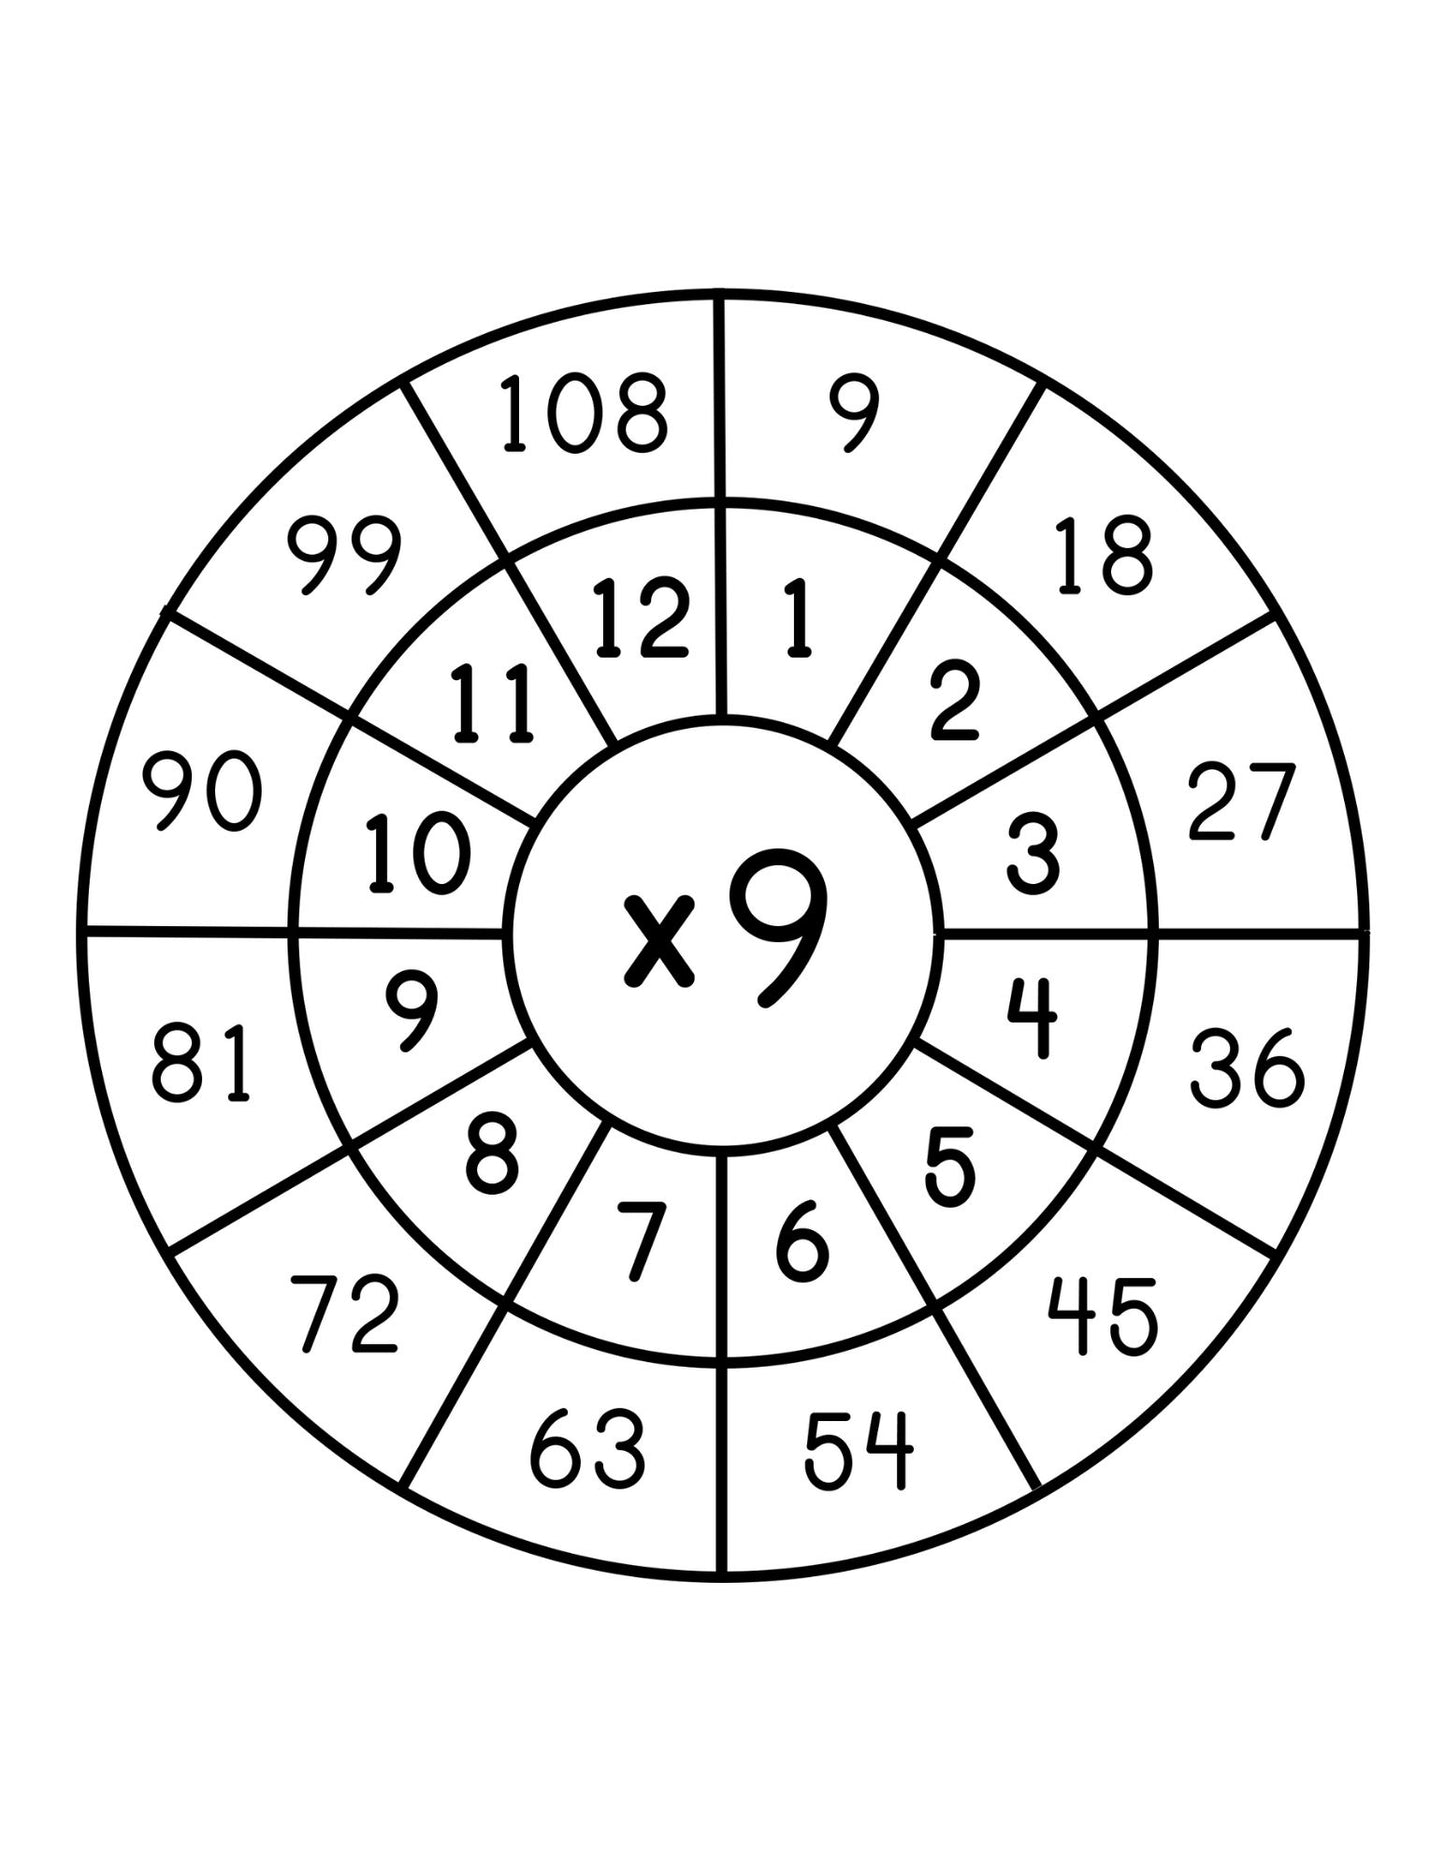 Multiplication Wheels 1-12